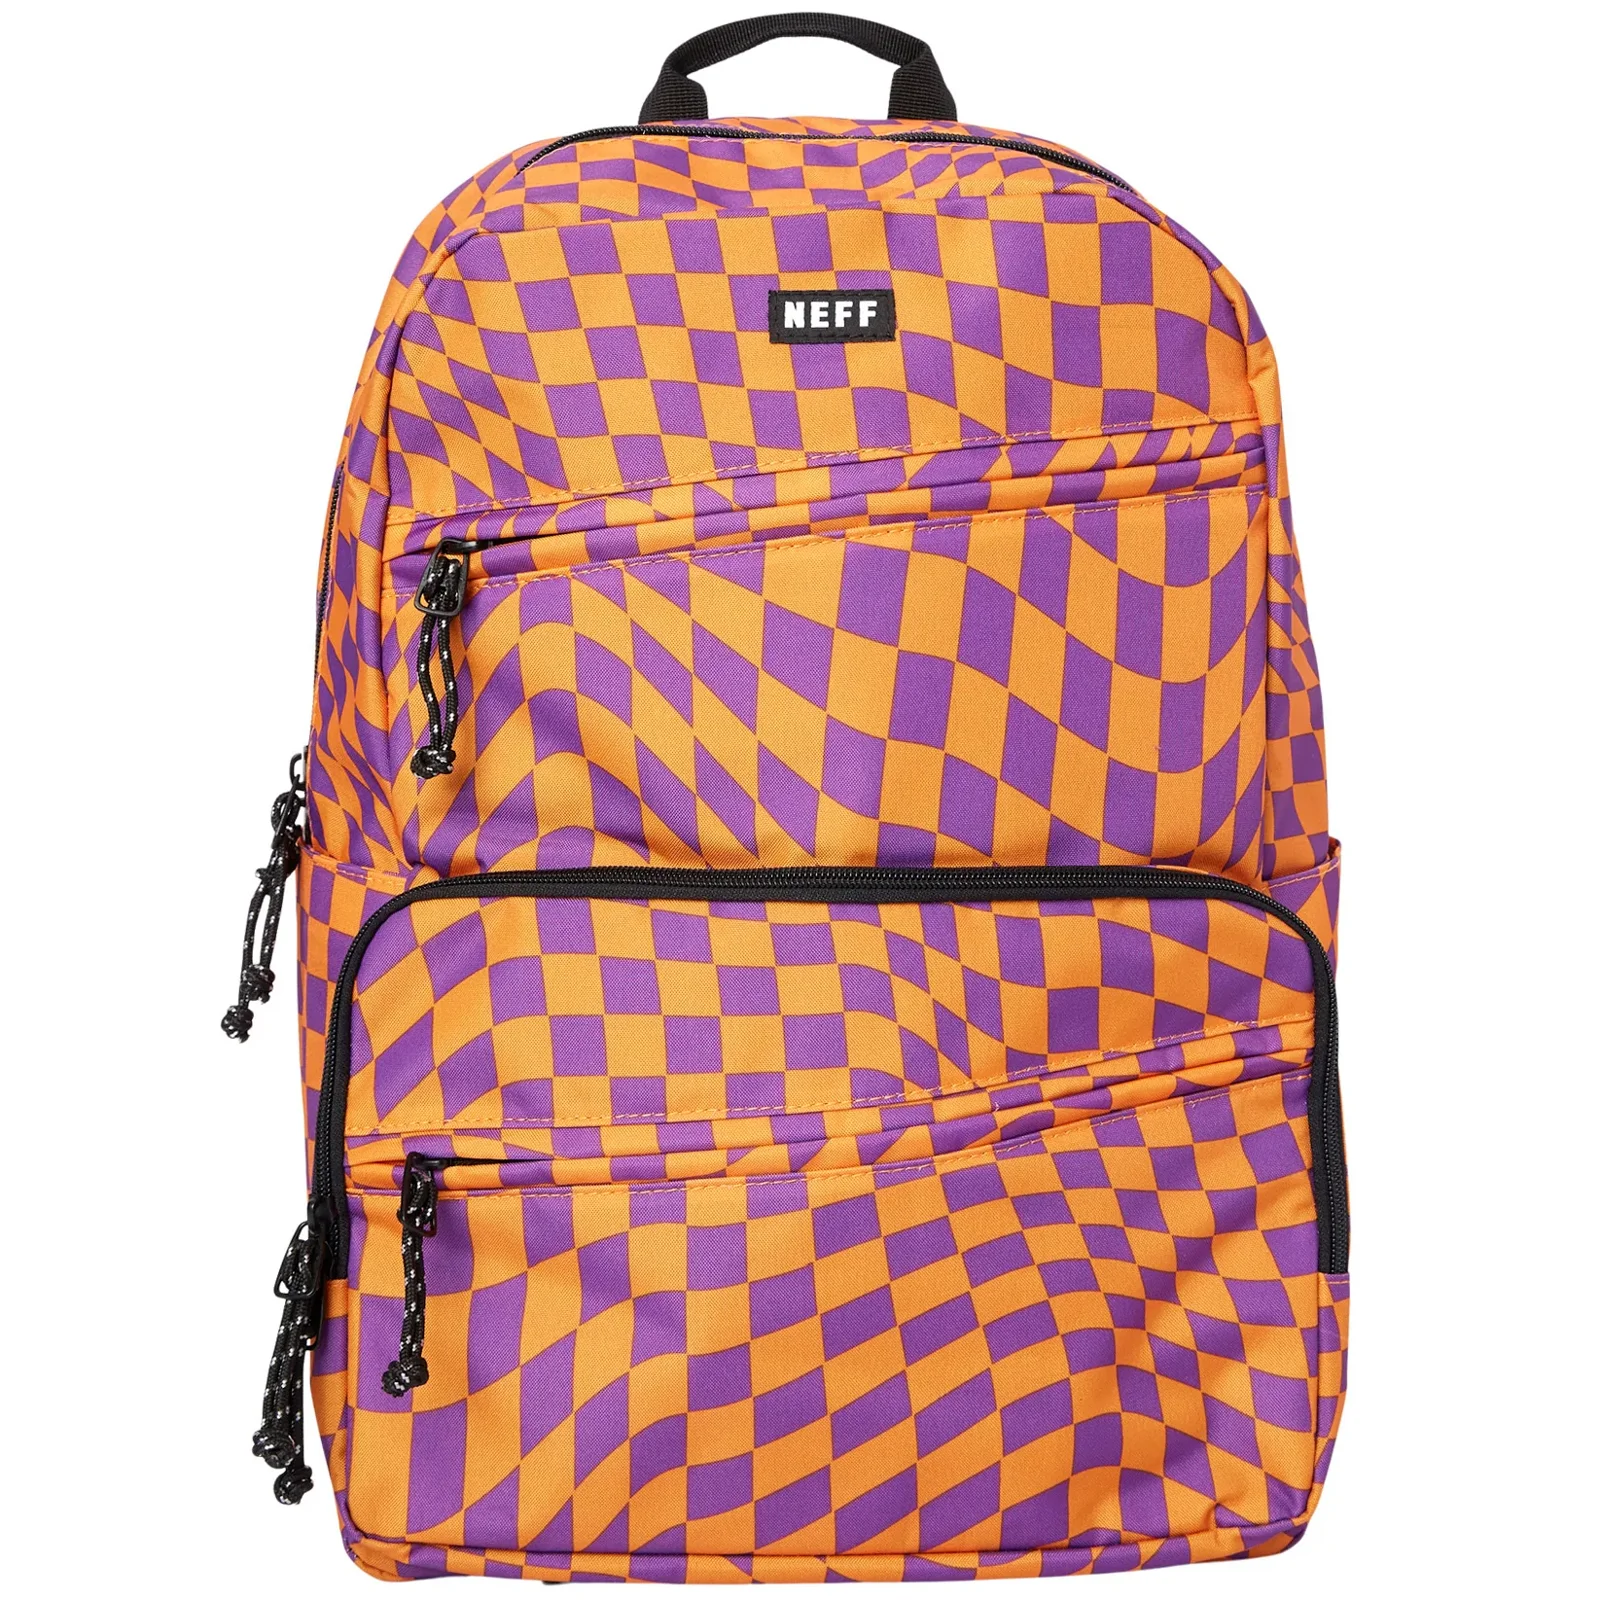 neff backpack | Backpacks, Fun bags, Bags